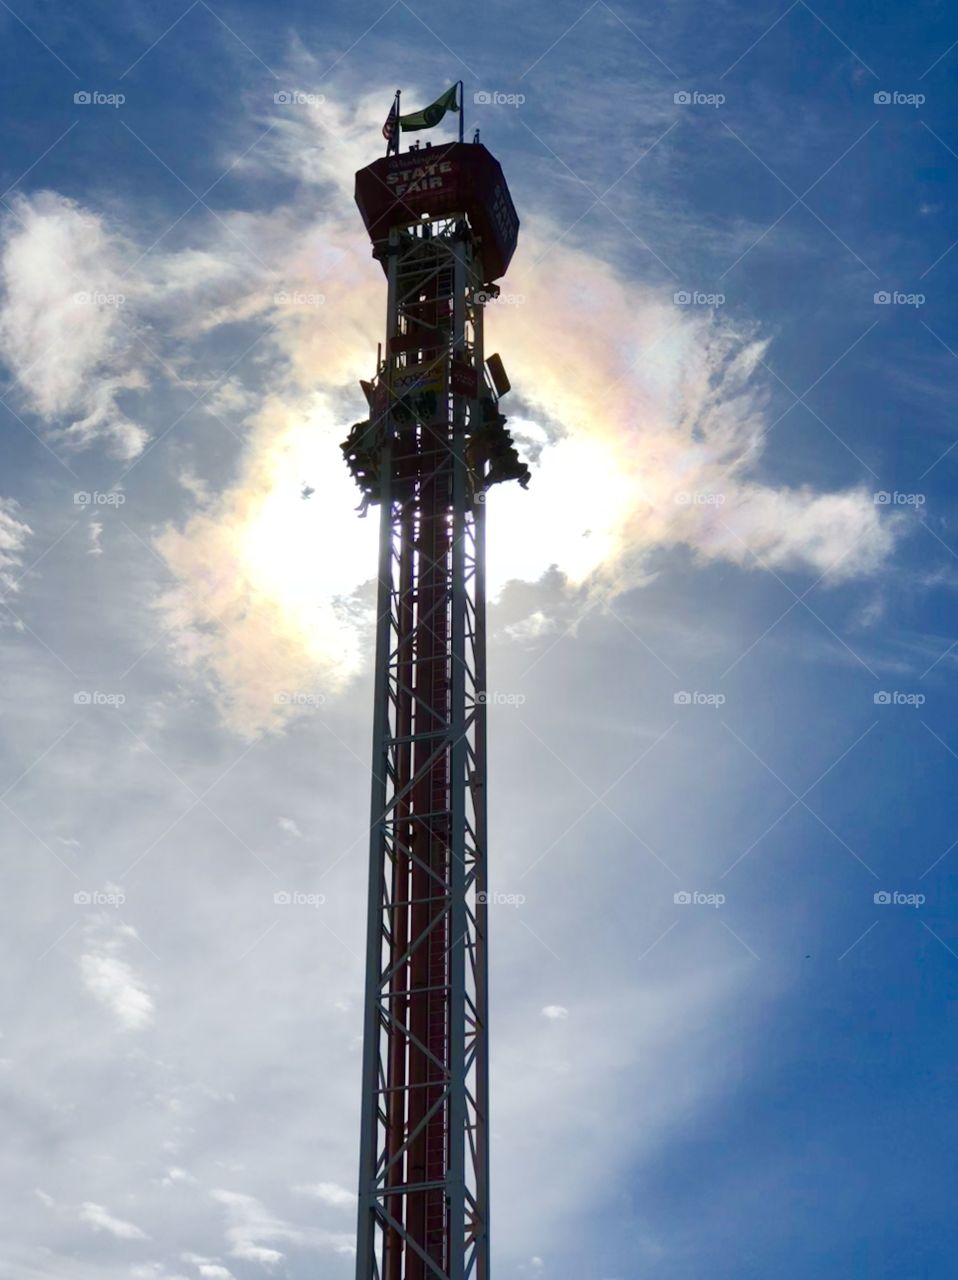 Washington State Fair Tower Amusement Ride